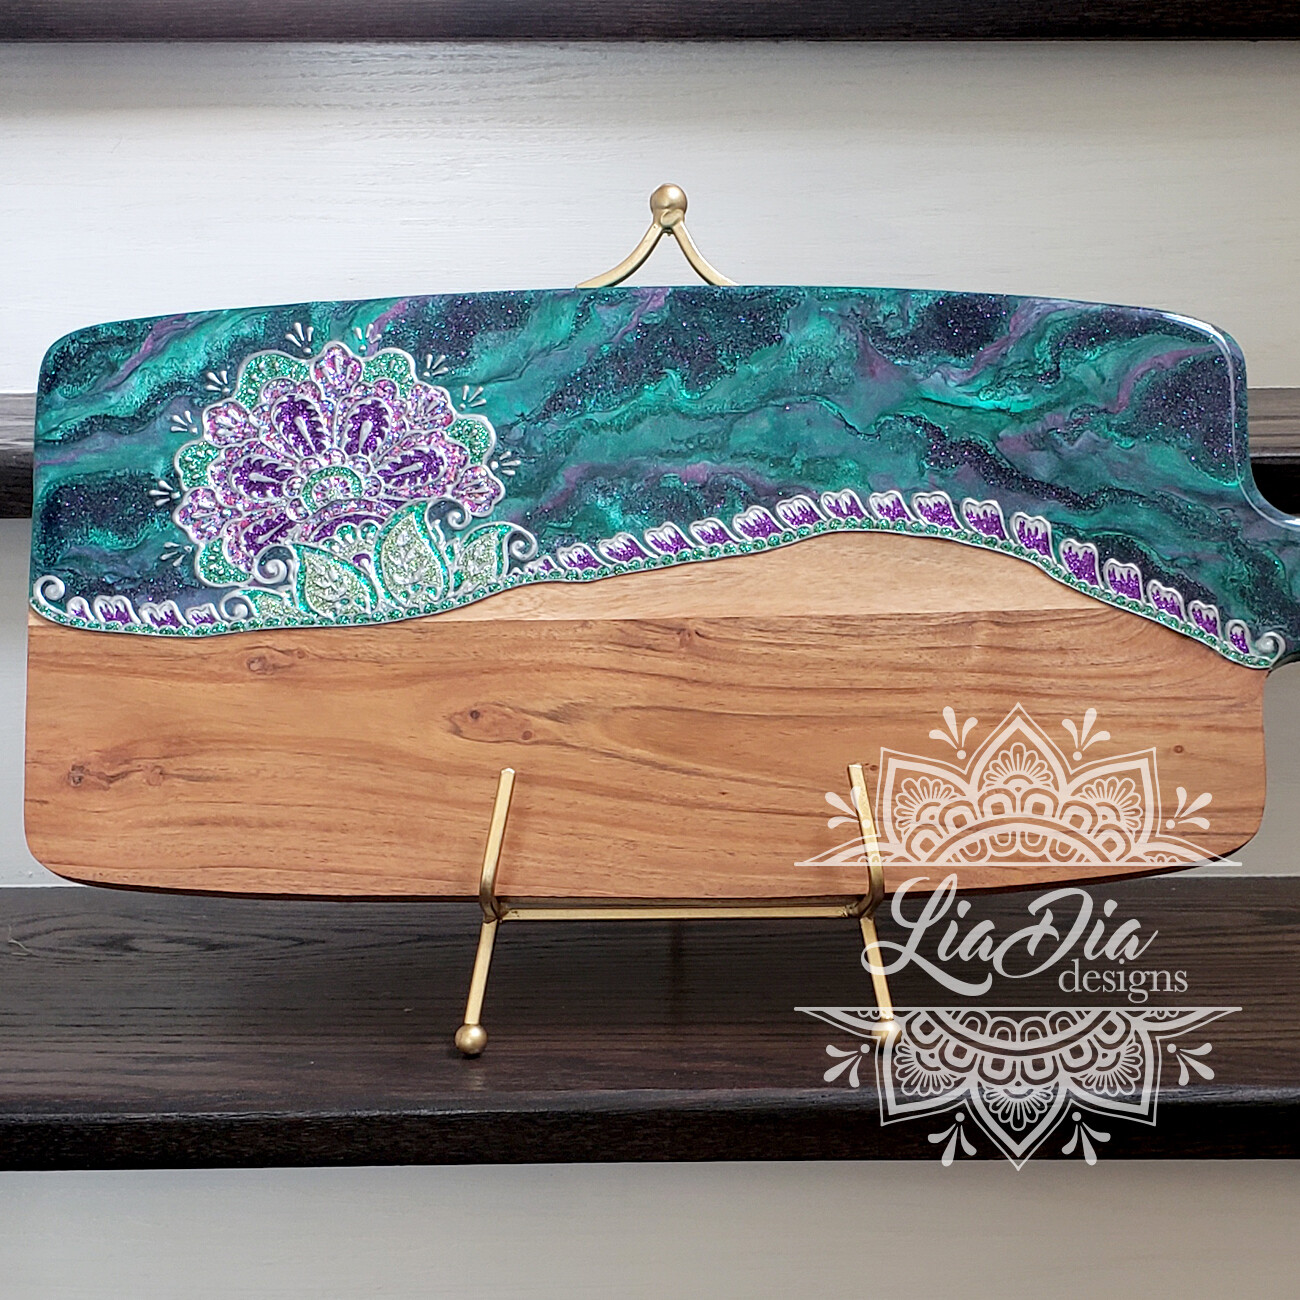 Mermaid Garden Resin Charcuterie Cheese Paddle Board